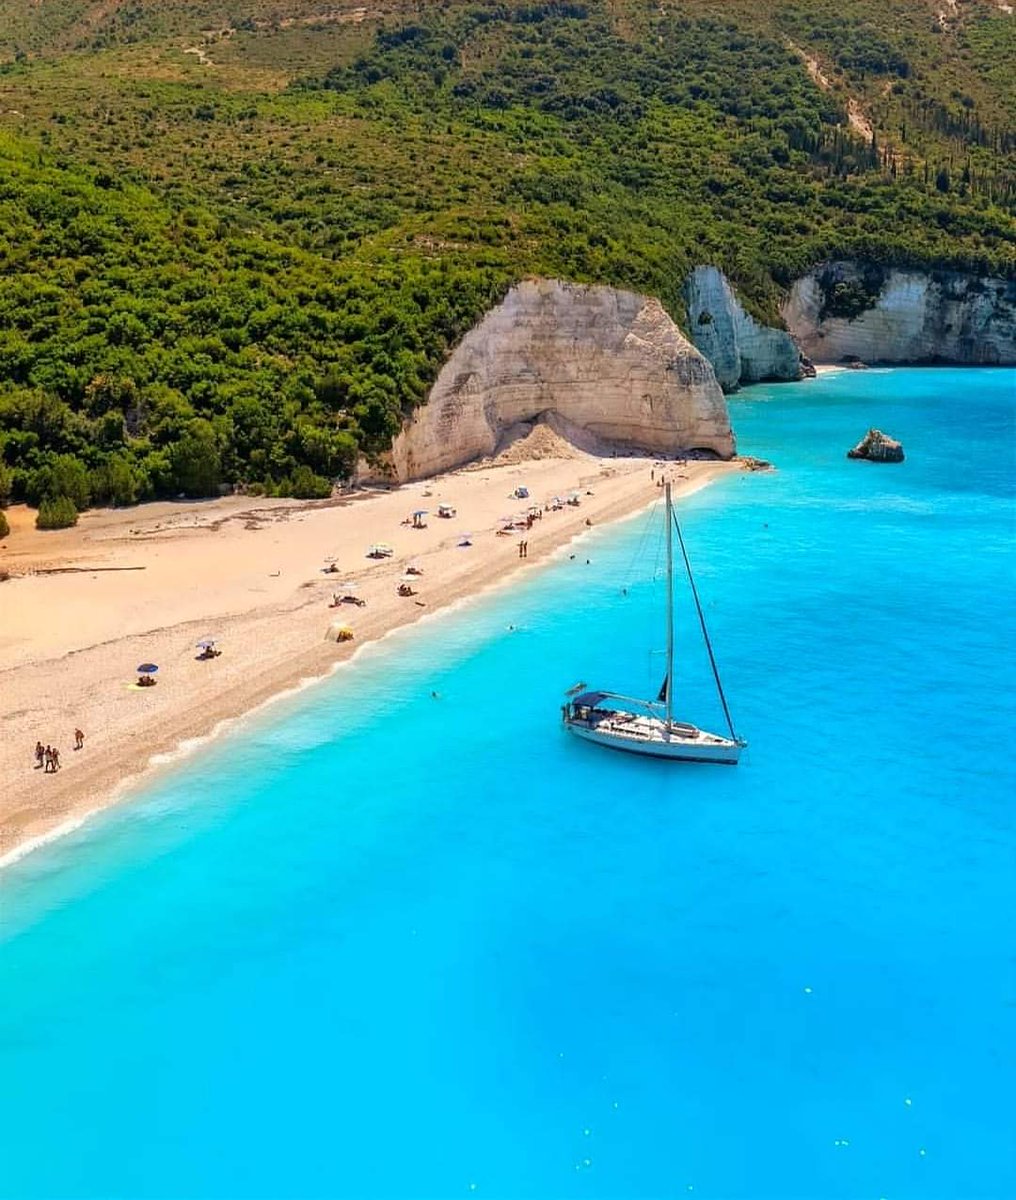 Kefalonia Island, Greece 🇬🇷
It’s gorgeous.